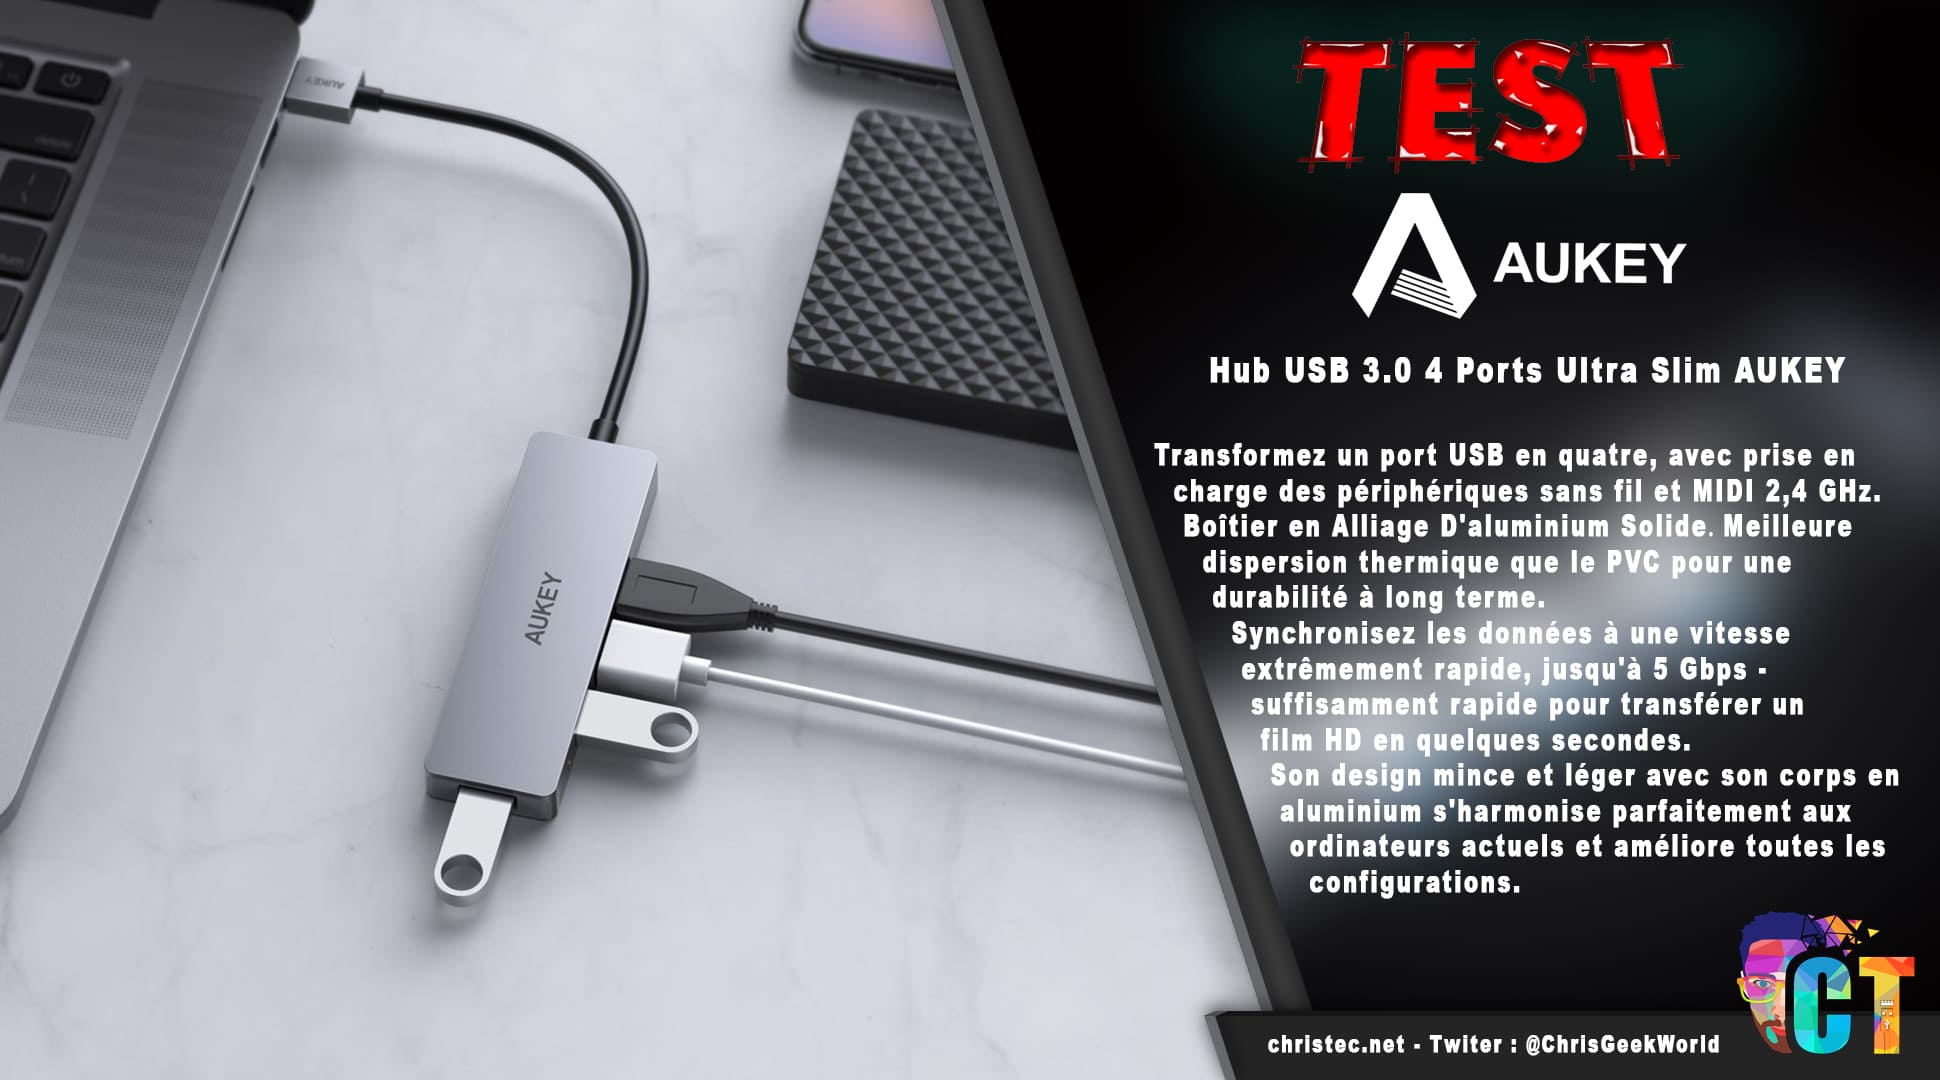 image en-tête Test du hub USB 3.0 4 ports ultra slim de Aukey